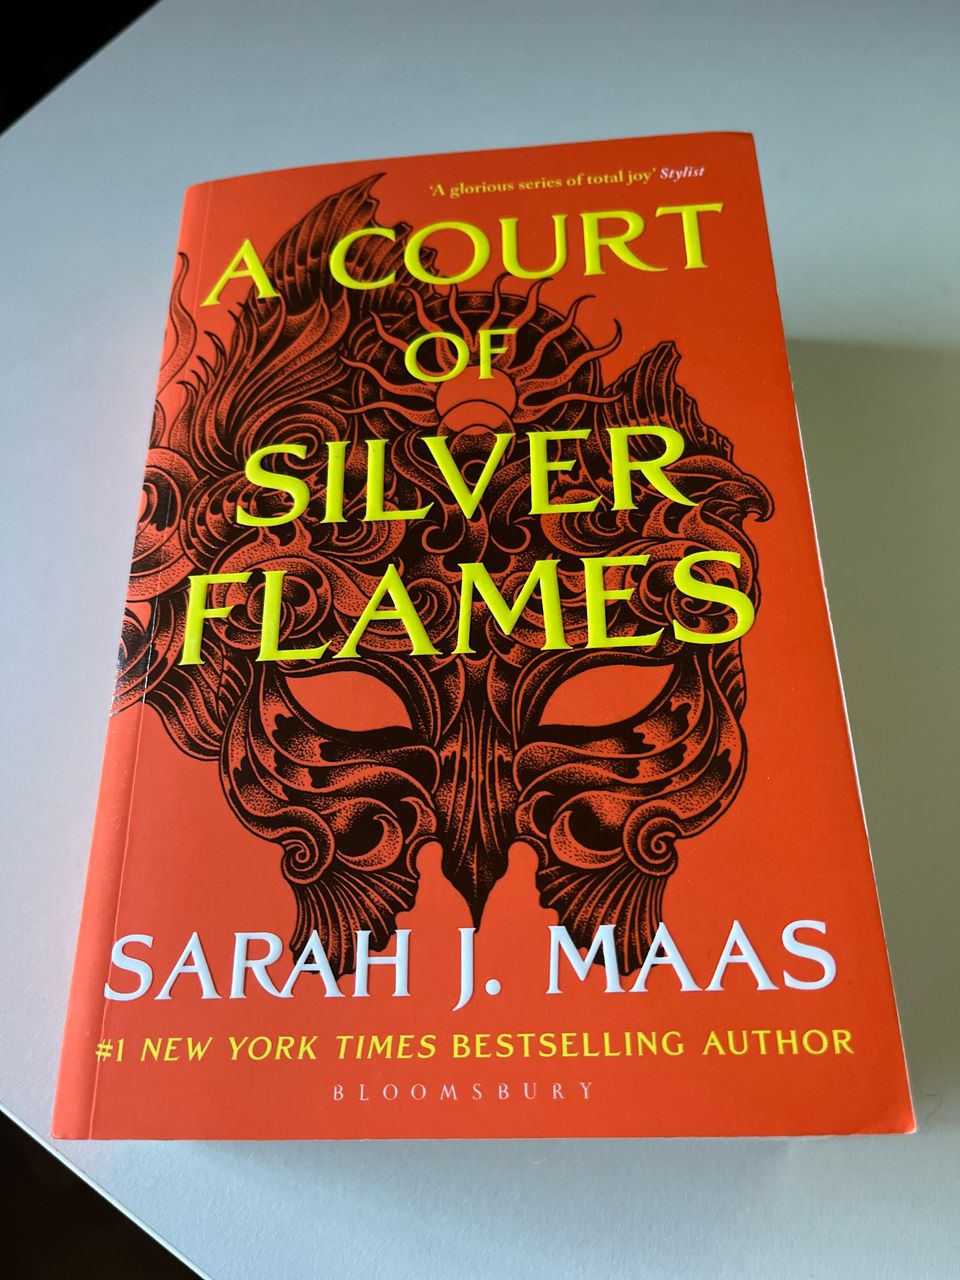 Sarah J. Maas, A court of silver flames